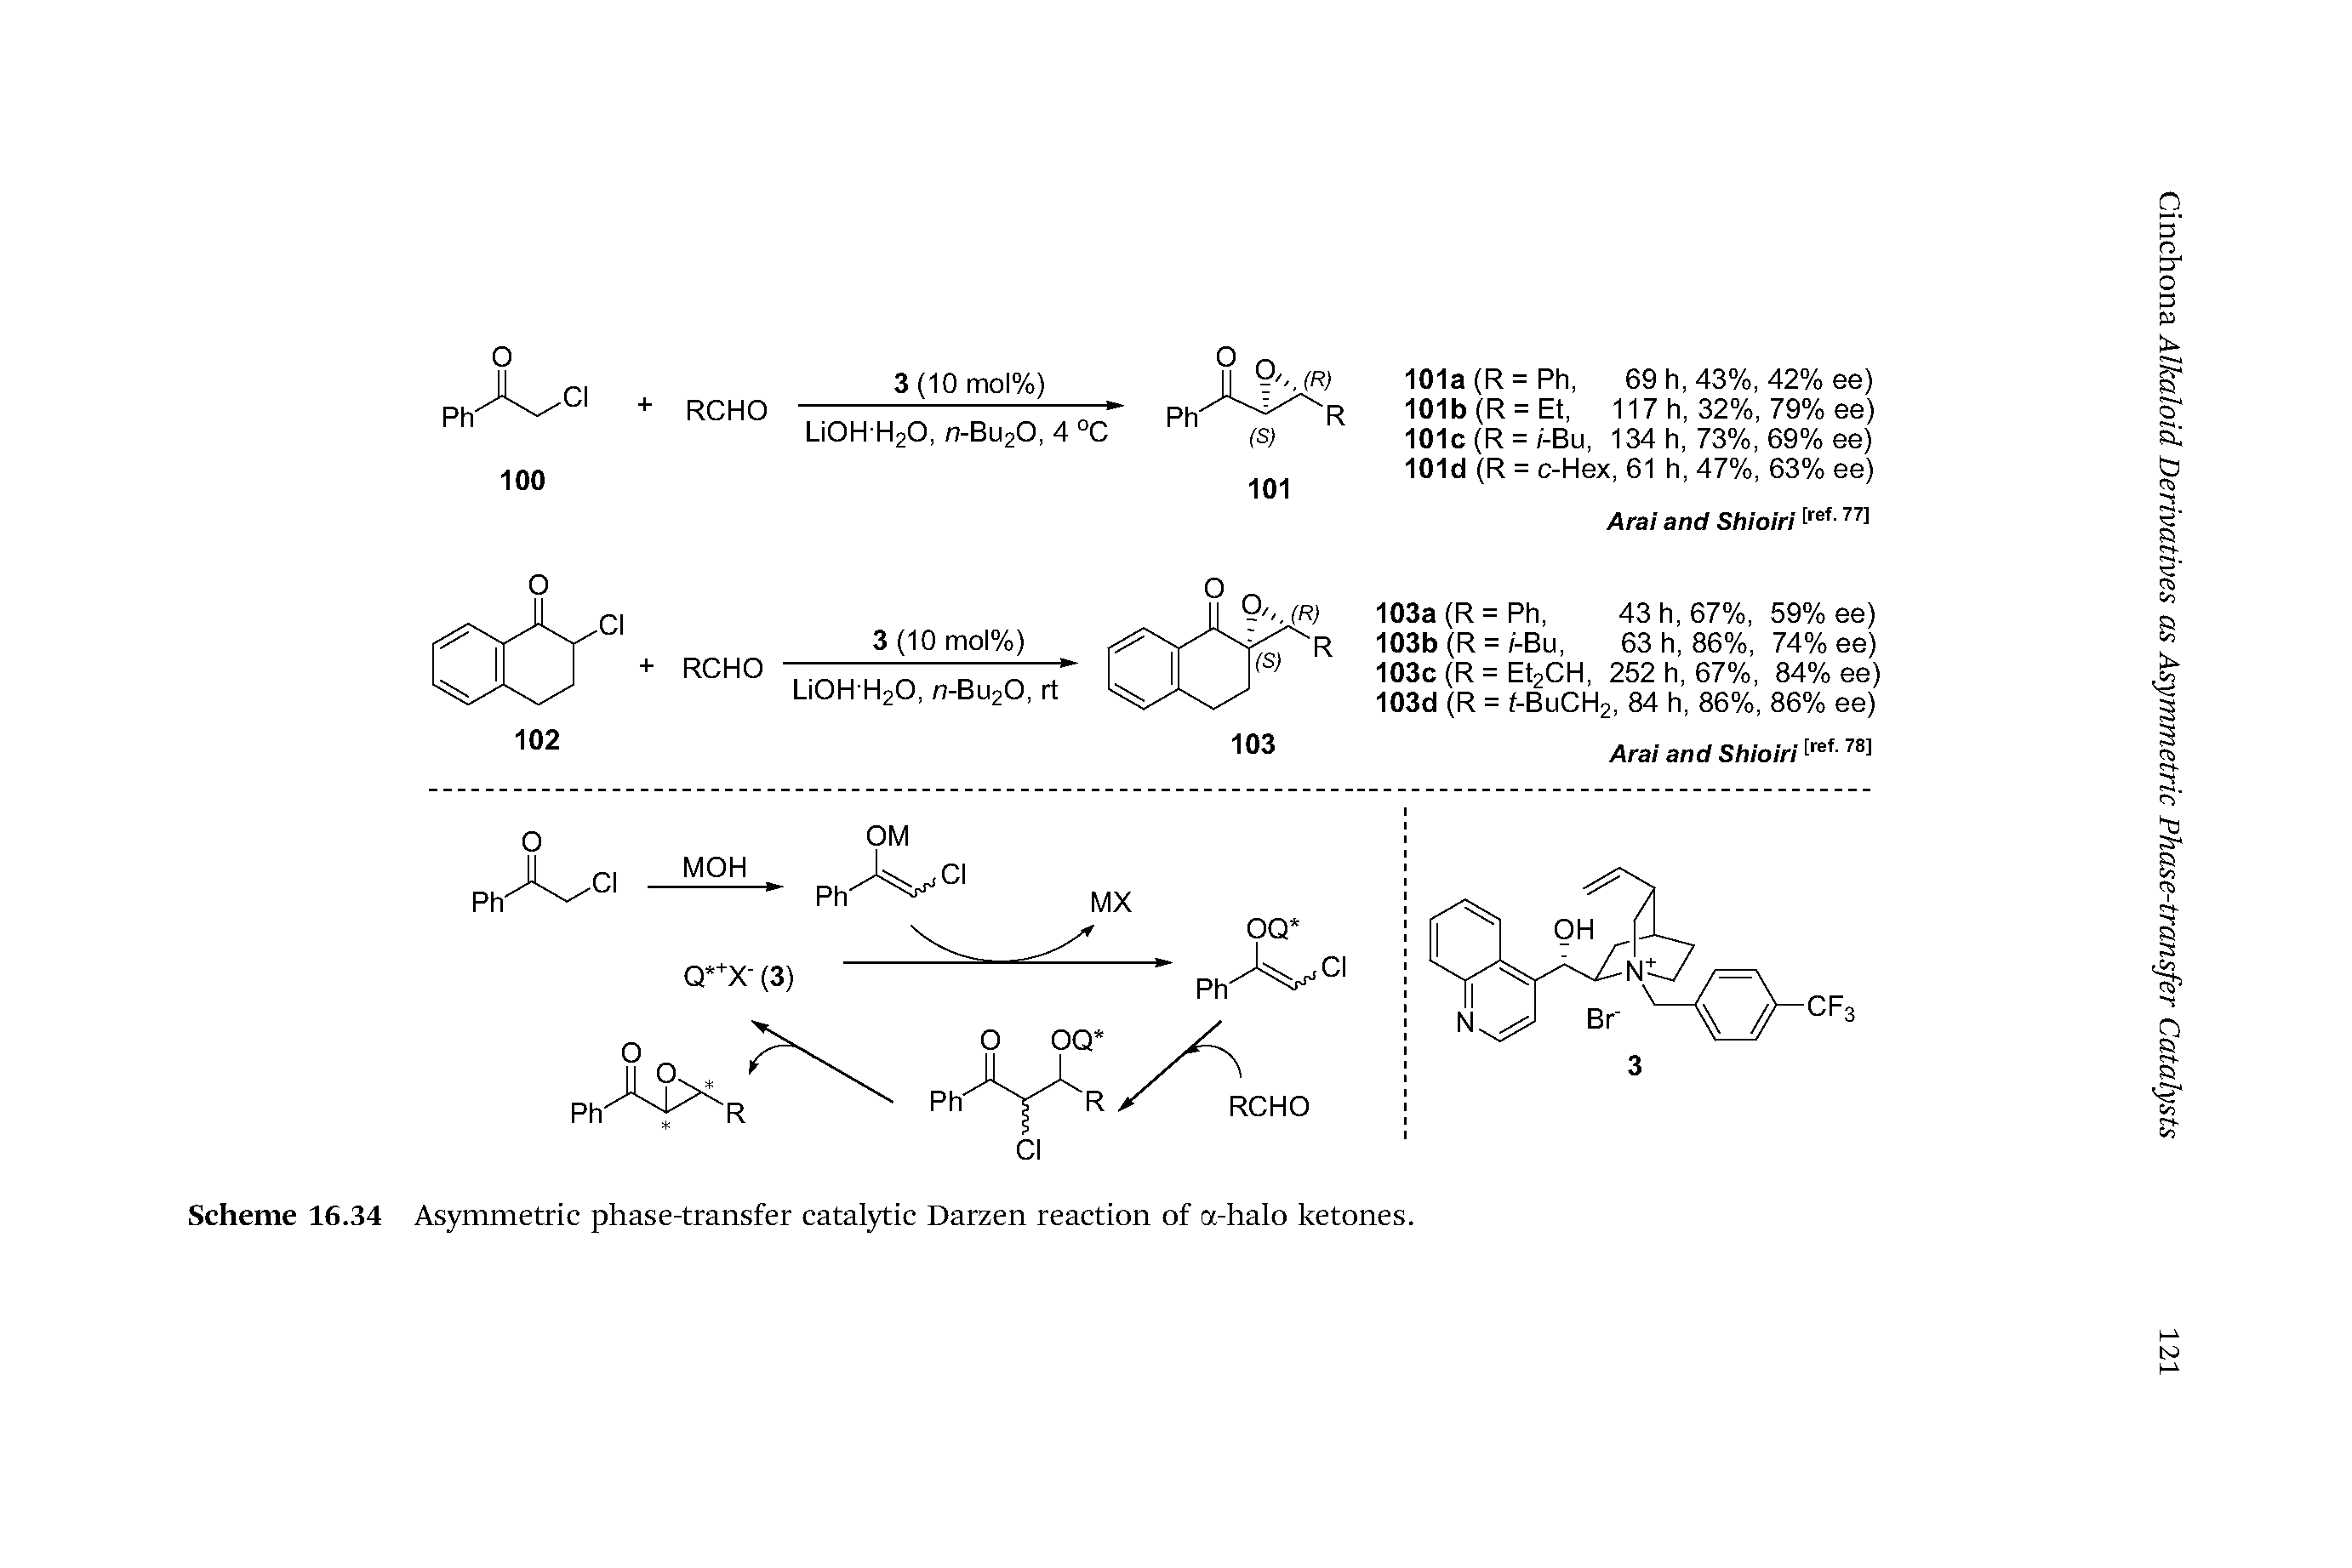 Scheme 16.34 Asymmetric phase-transfer catalytic Darzen reaction of a-halo ketones.